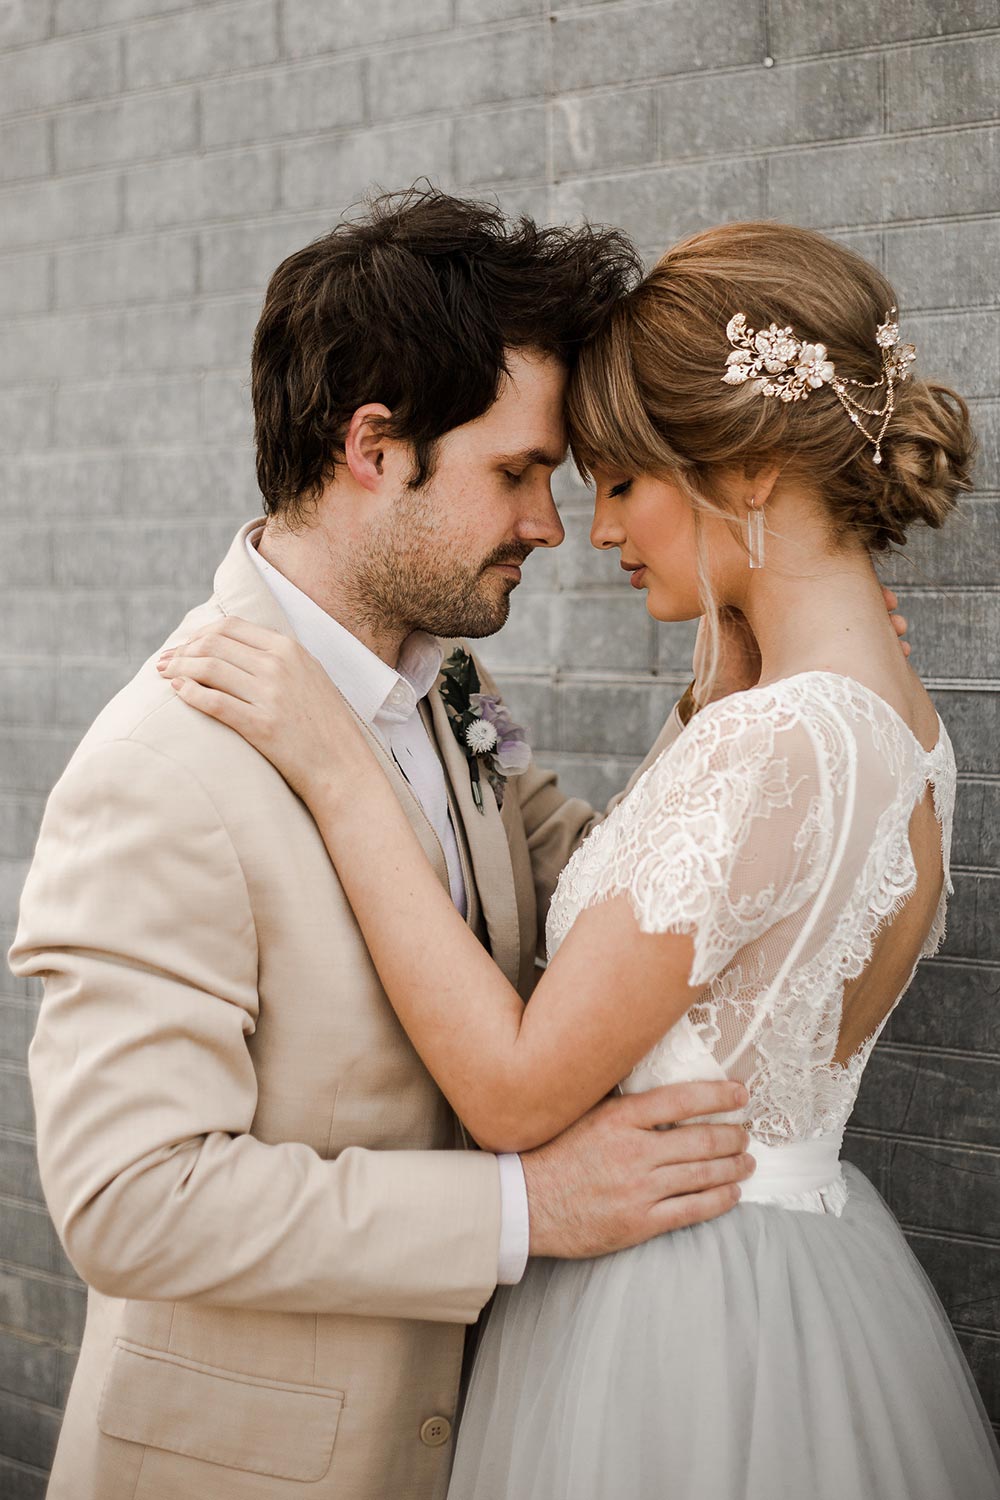 Borrowed Blue & Bliss: A Wedding Story in Dusty Blue ⋆ Ruffled